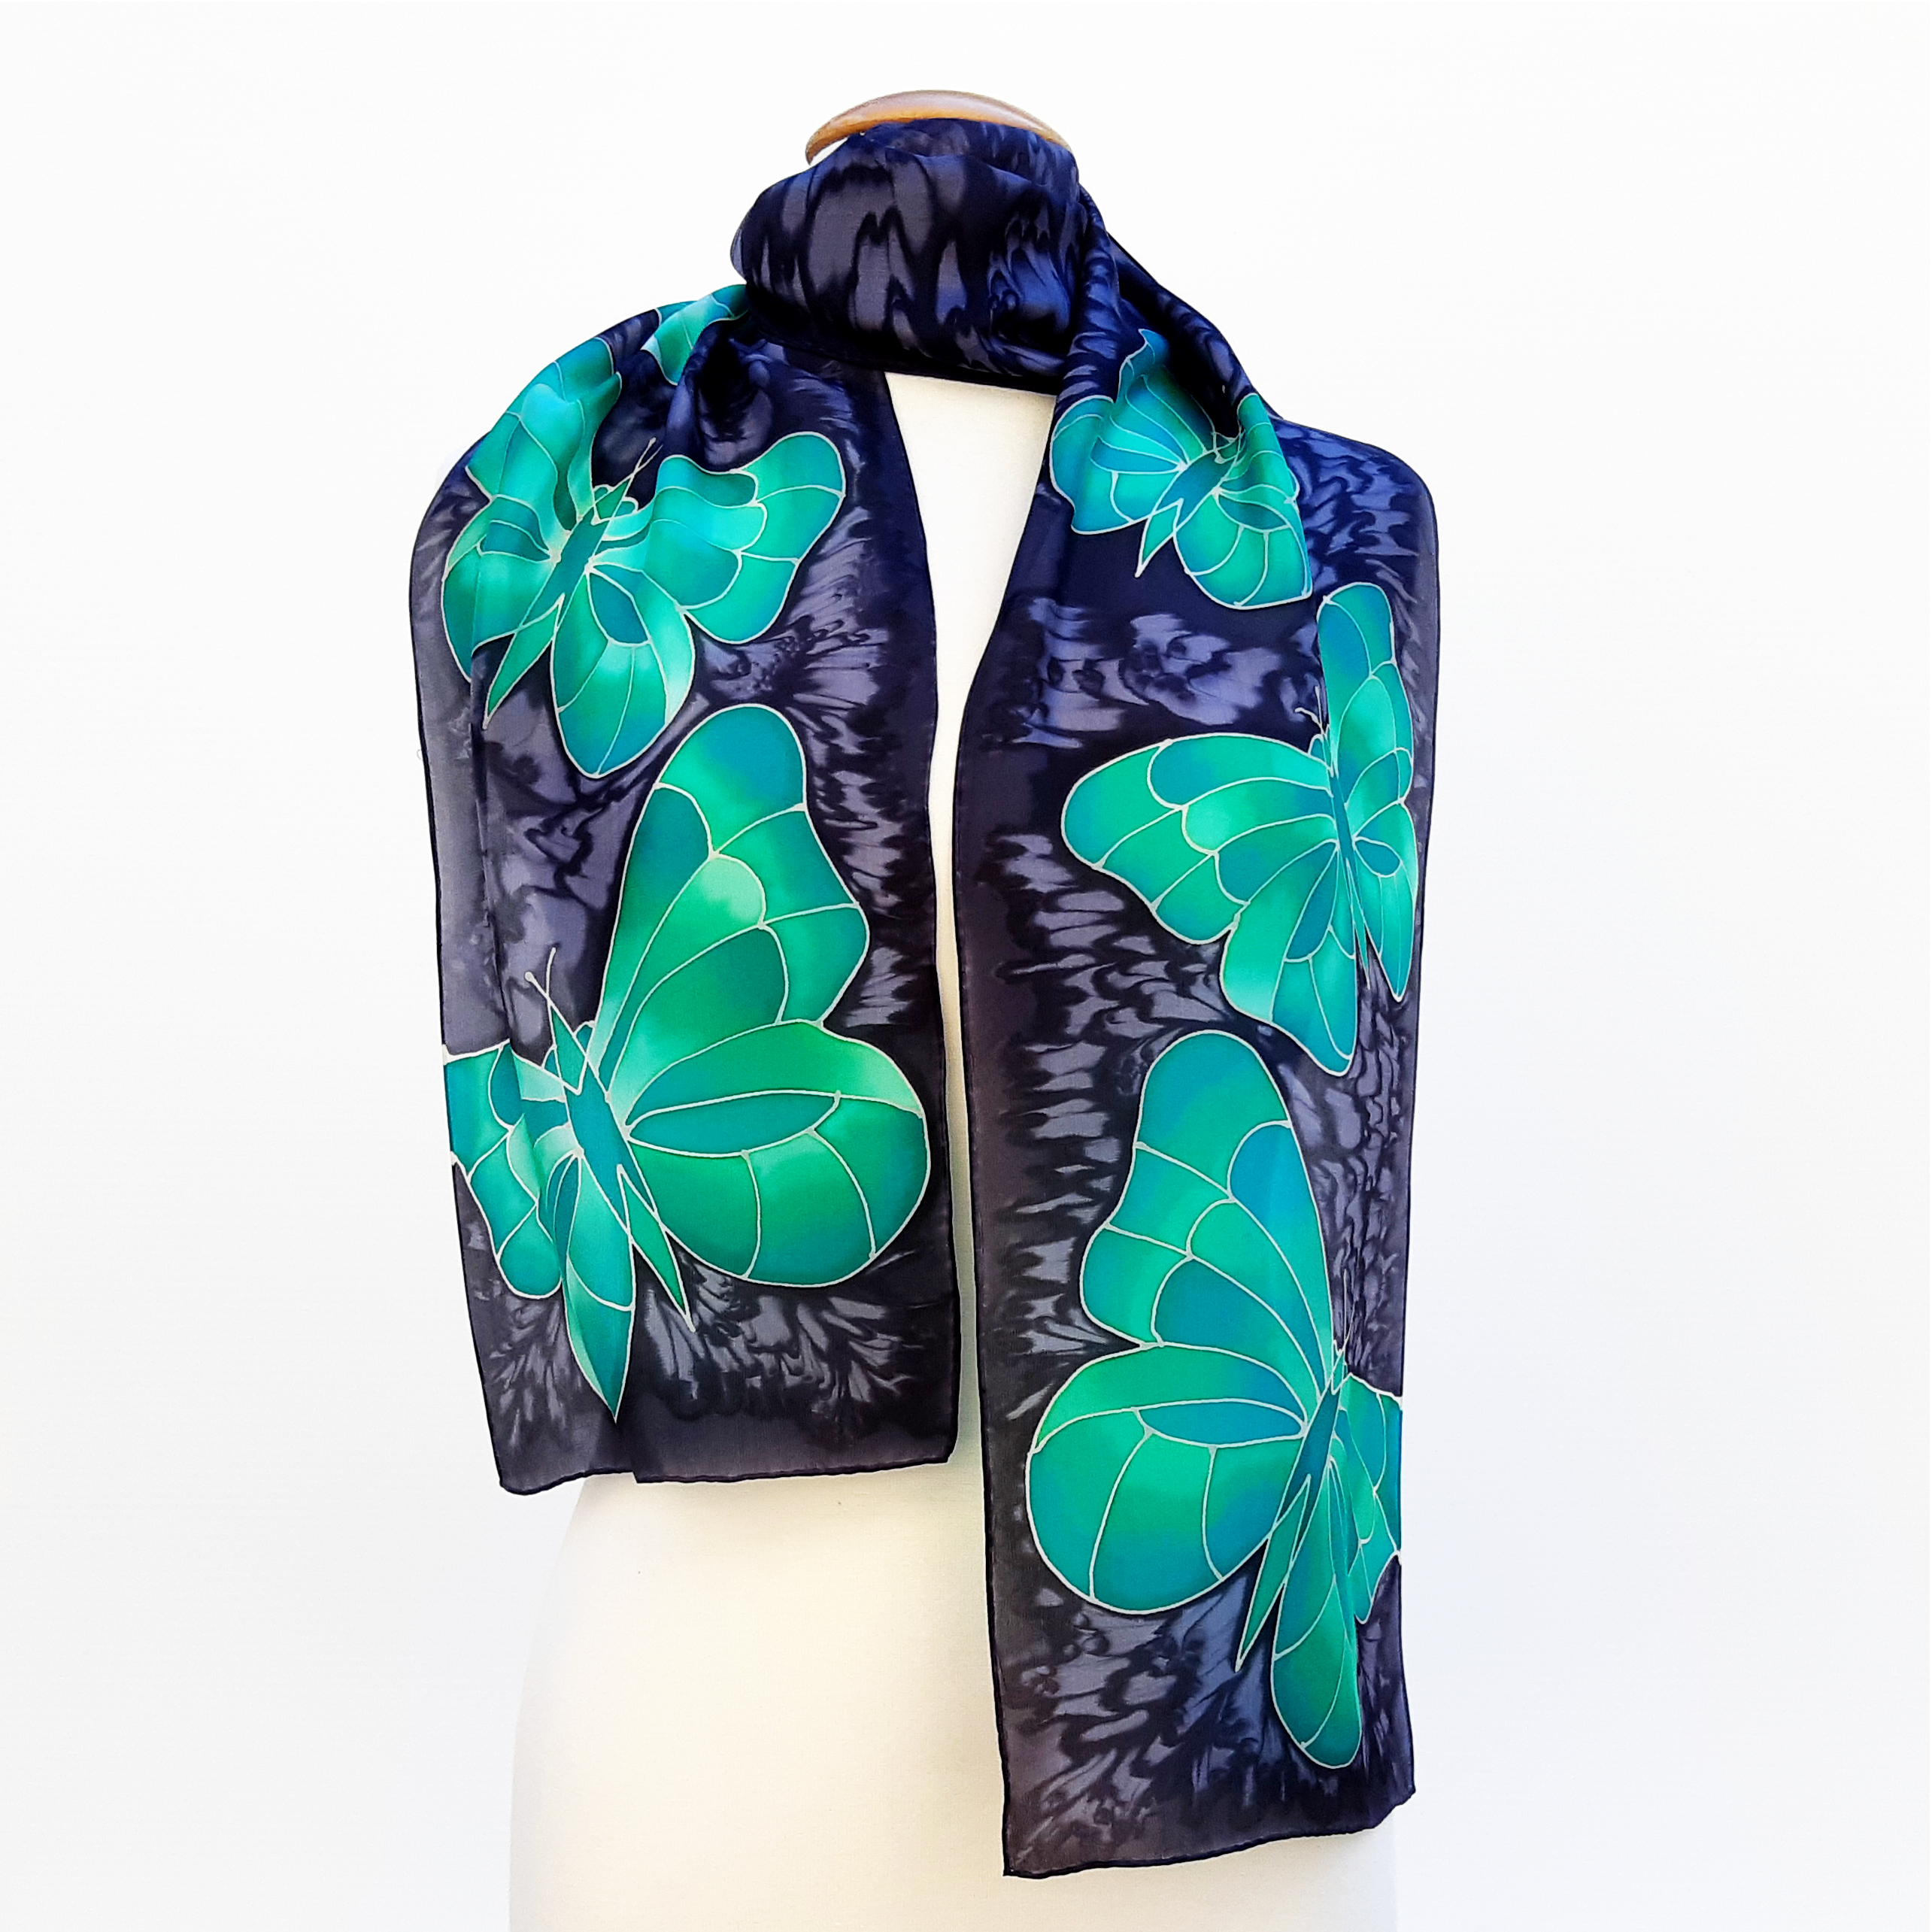 silk scarf hand painted green butterfly design art on black scarf made by Lynne Kiel